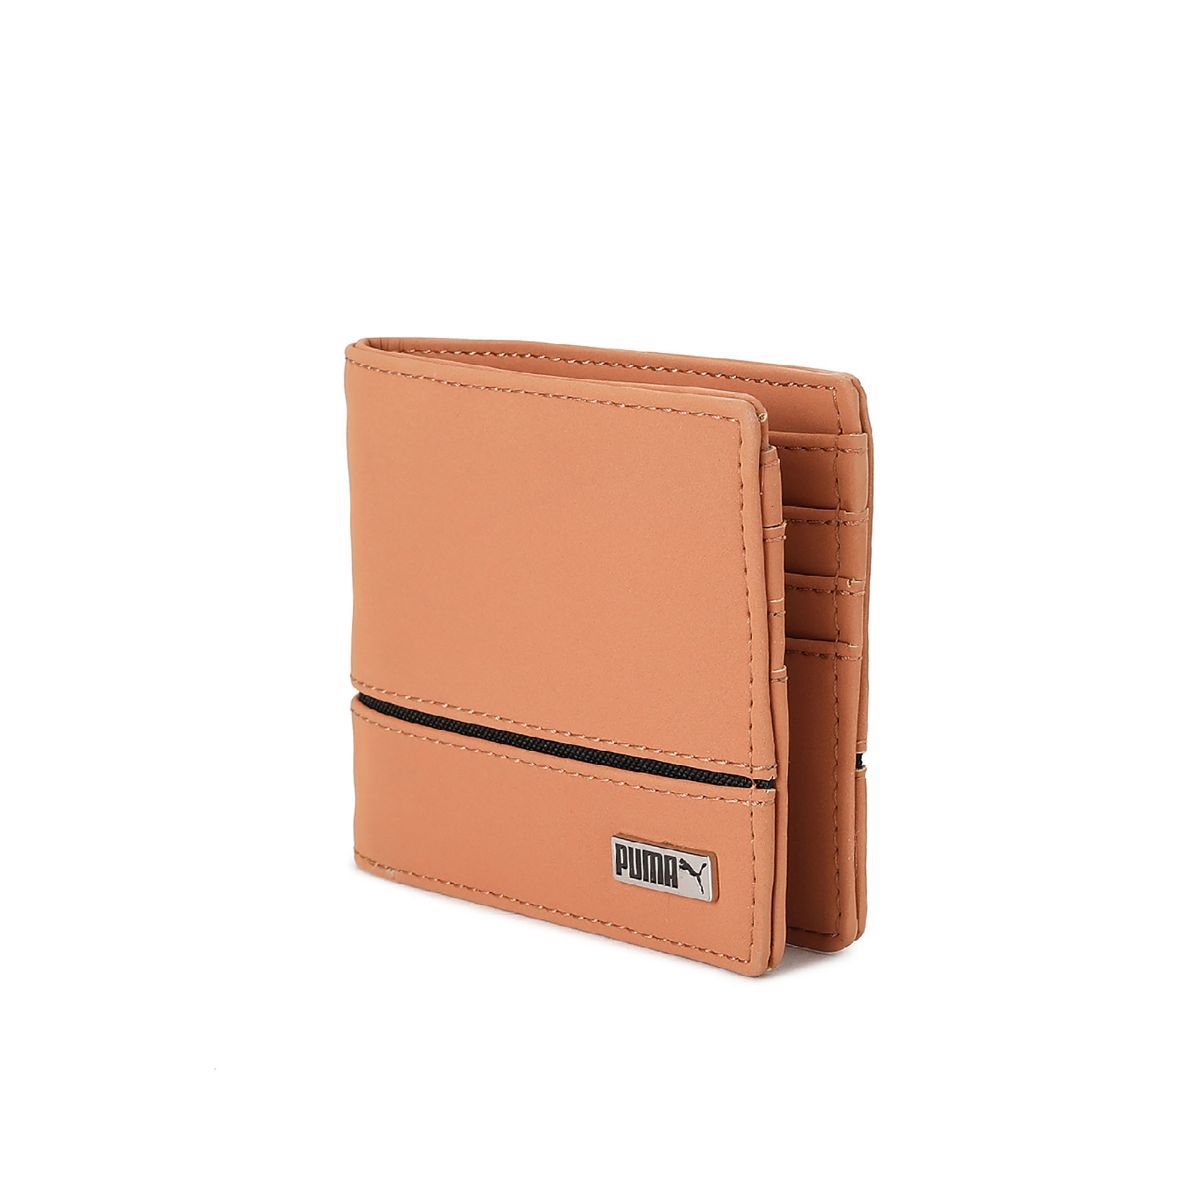 ZOO wallet long wallet kudu leather round zipper camel puma wallet 40 —  クラフトカフェ